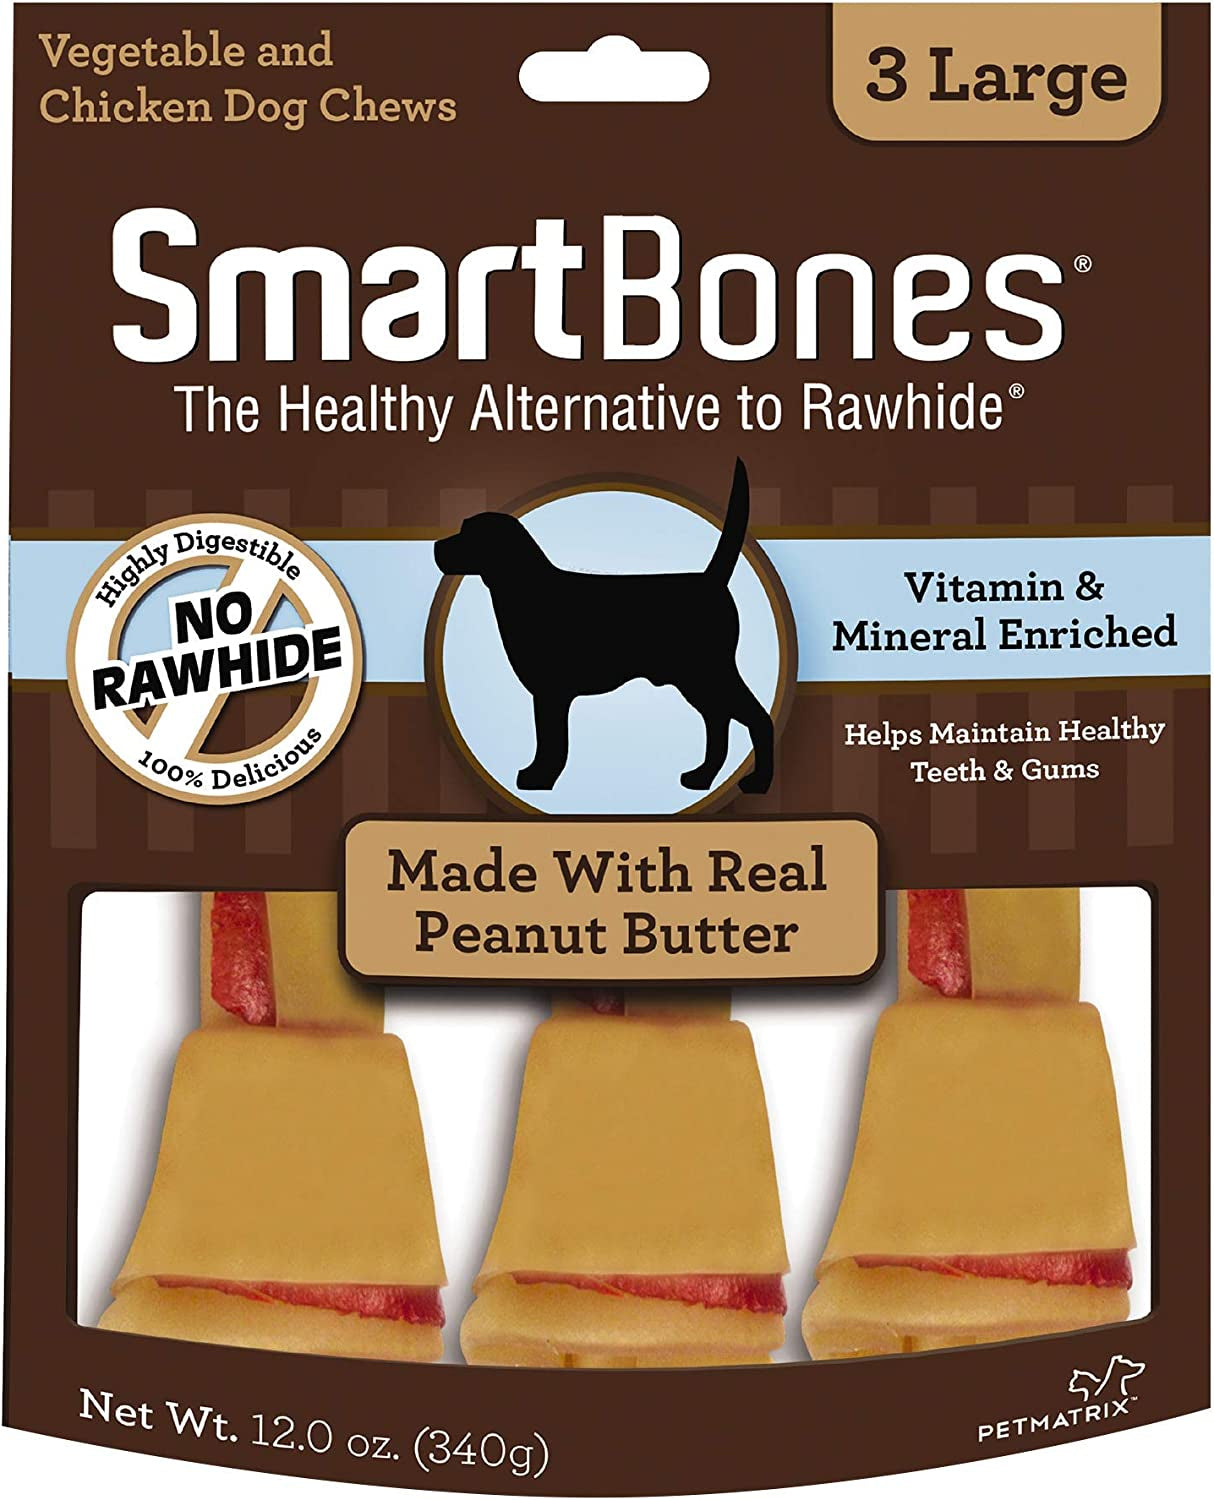 9 count (3 x 3 ct) SmartBones Rawhide Free Peanut Butter Bones Large